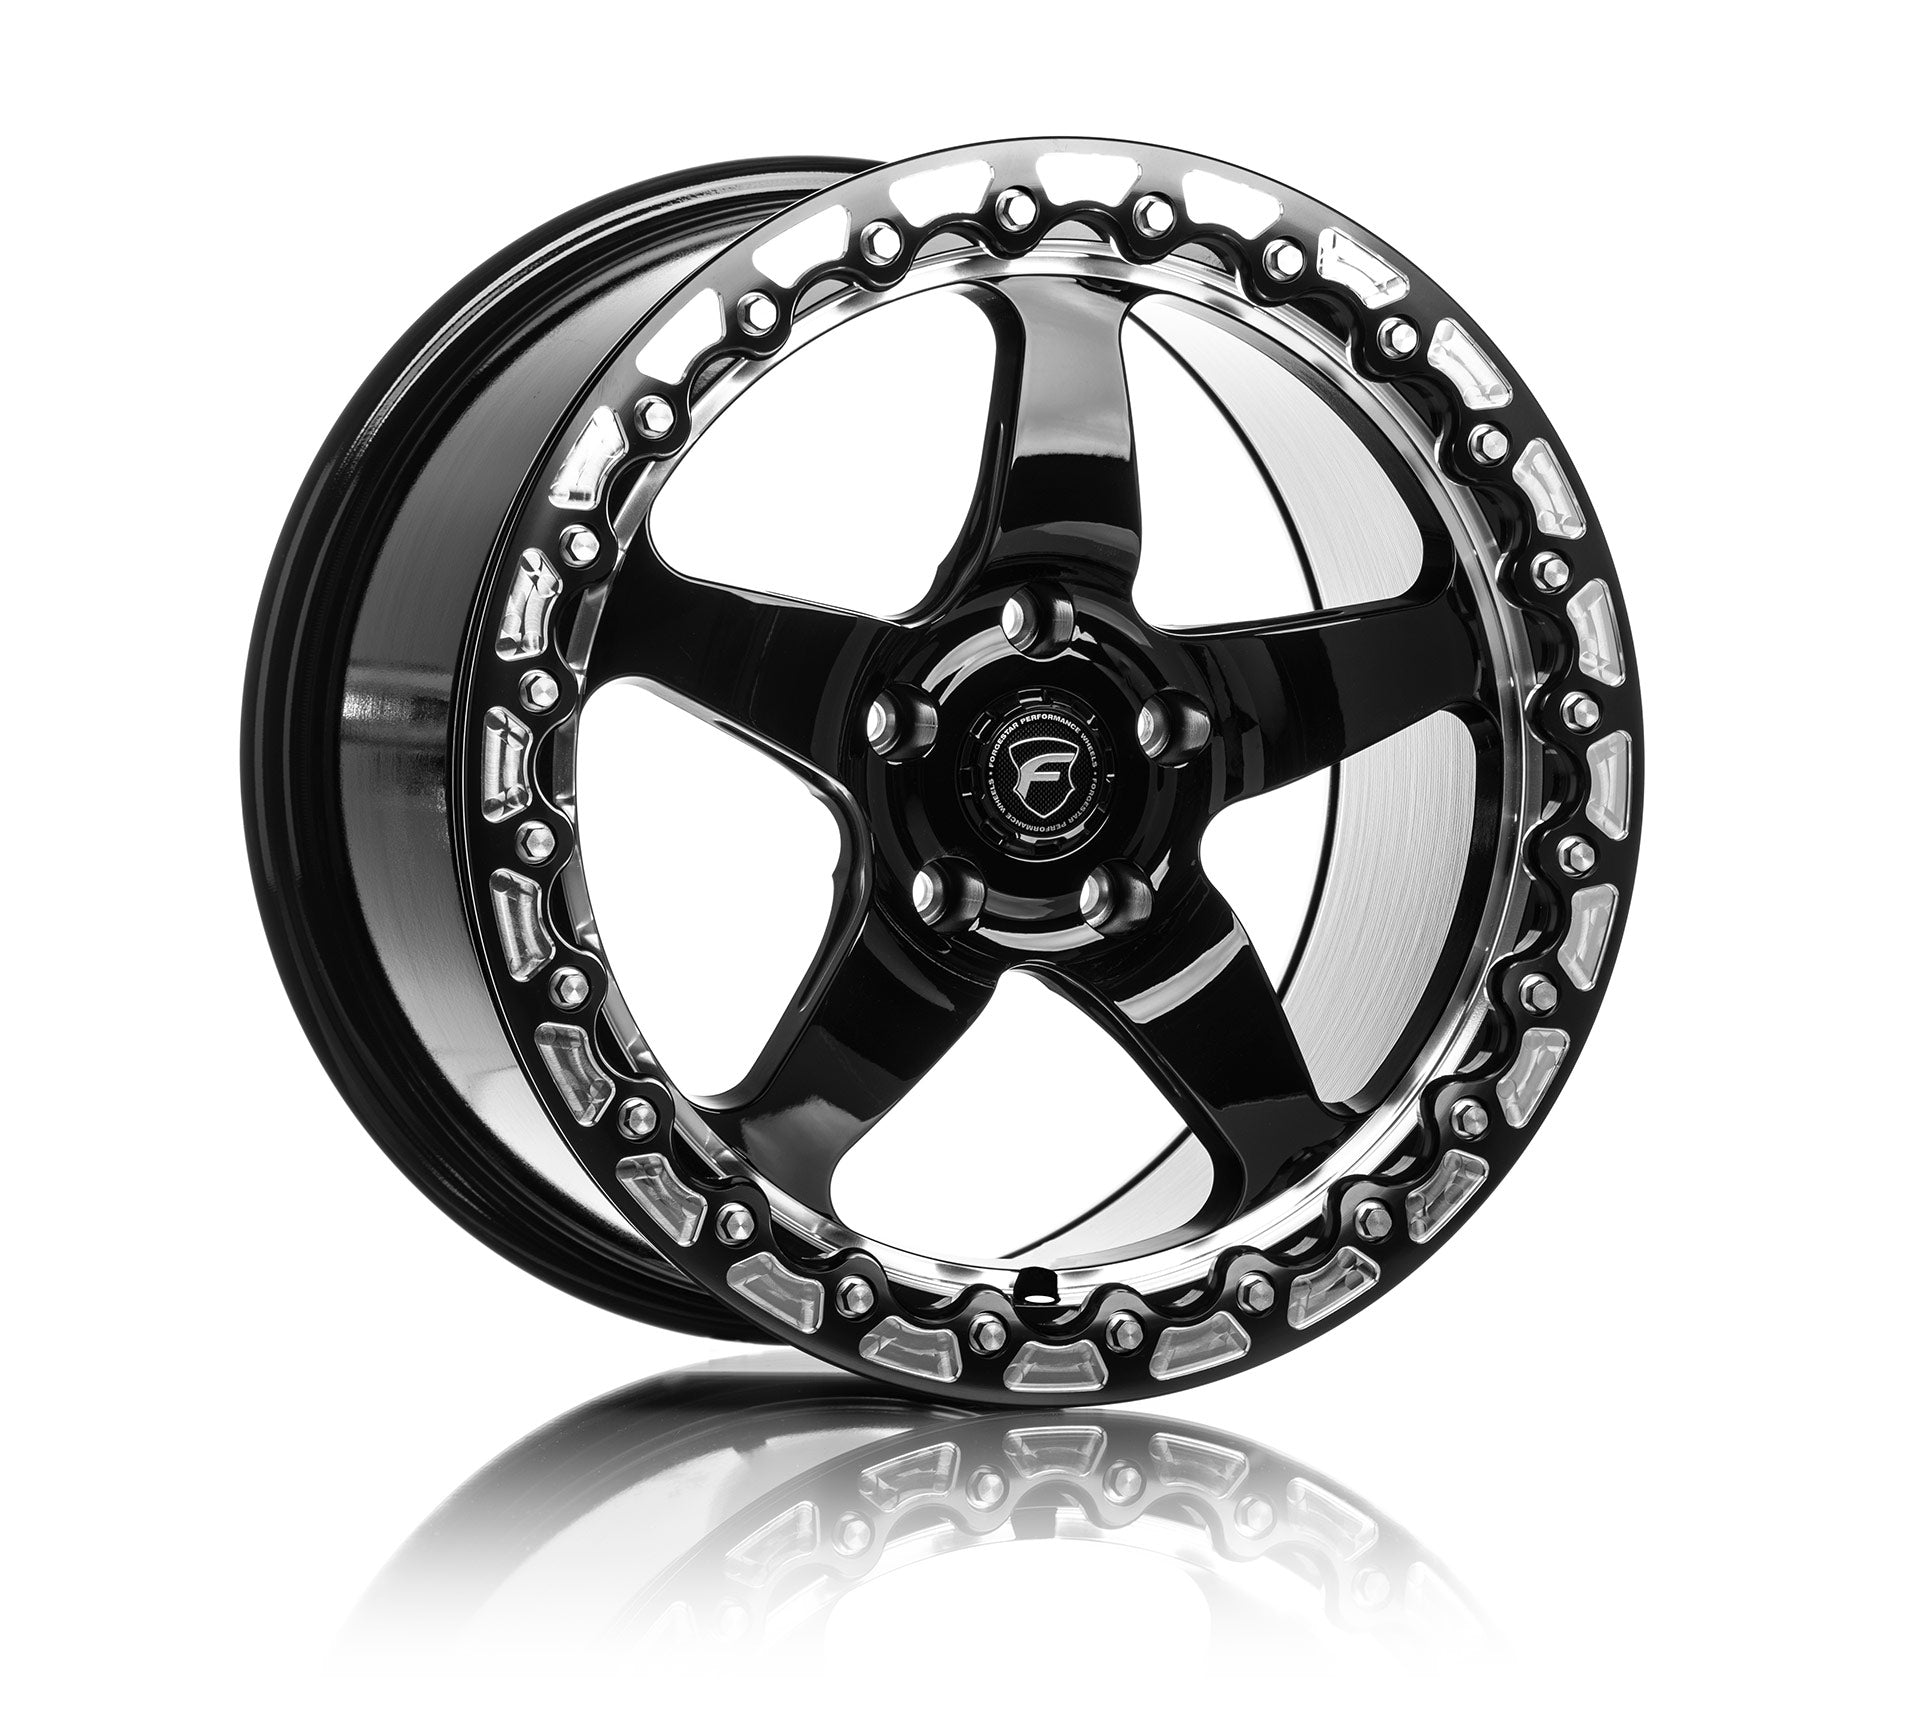 Forgestar D5 BEADLOCK Drag Racing Wheels - Gloss Black w/Machined Lip - 18x10.5 - Sold Individually - Motorsports LA